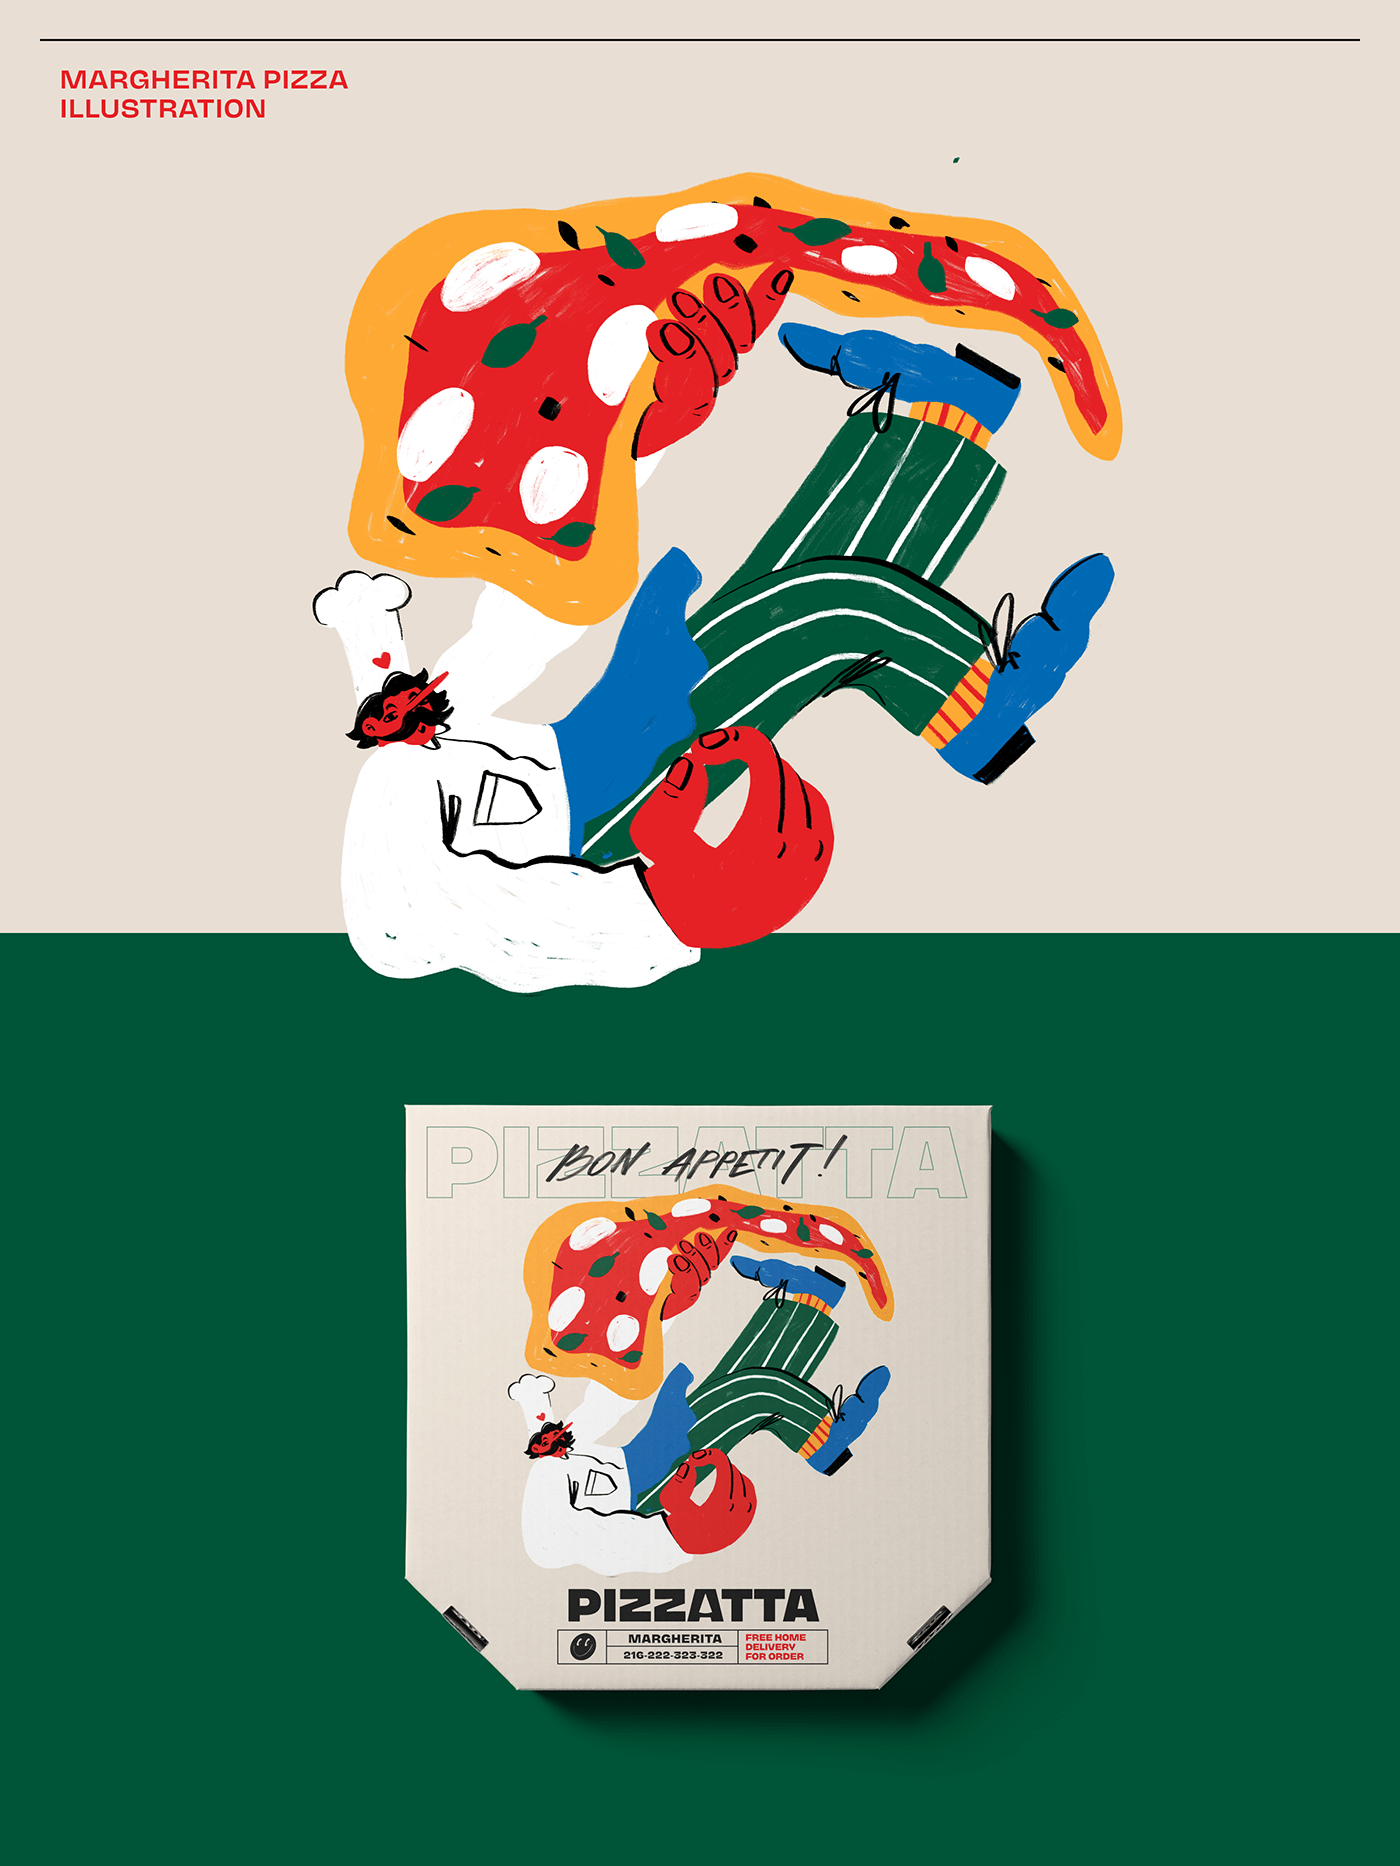 branding  Identity Design Pizza catering Digital Art  Food  marketing   packaging design pizzeria restaurant